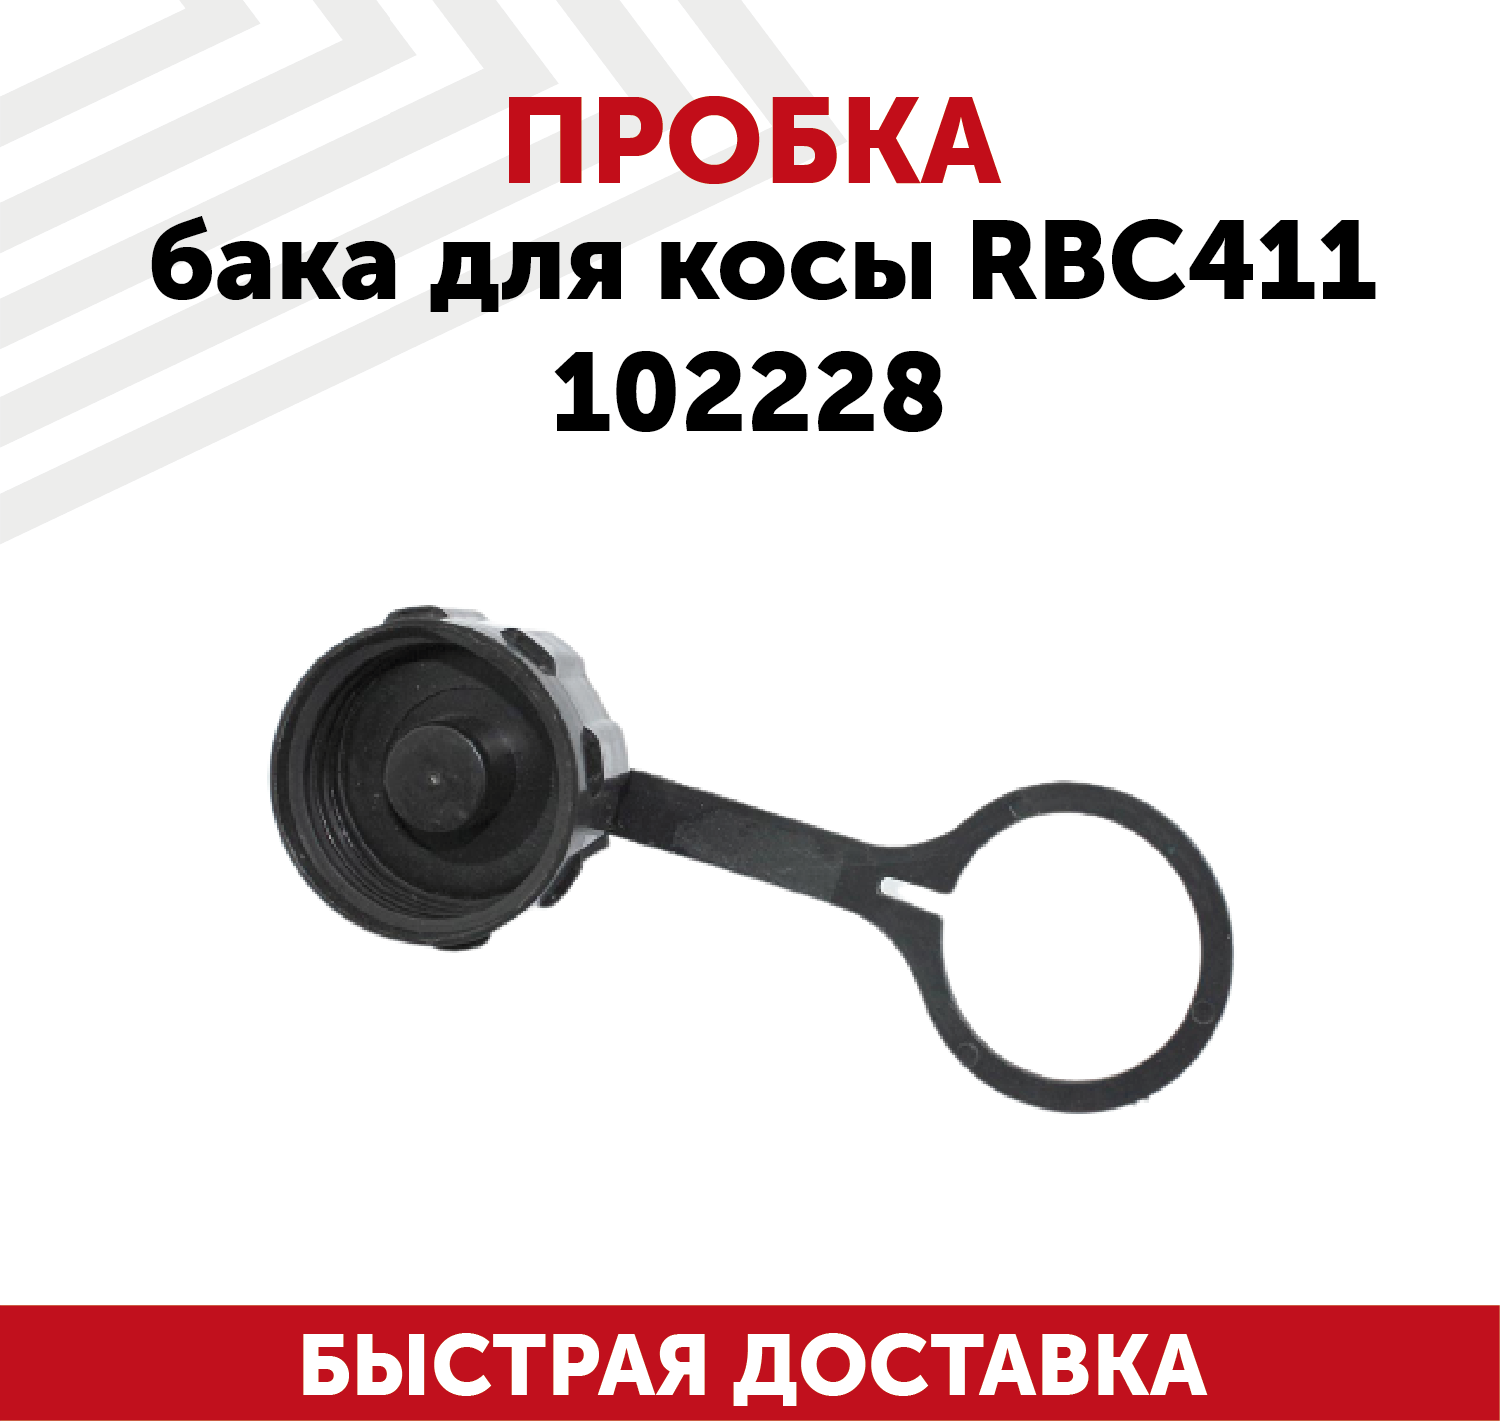 Пробка бака для бензокосы RBC411 102228